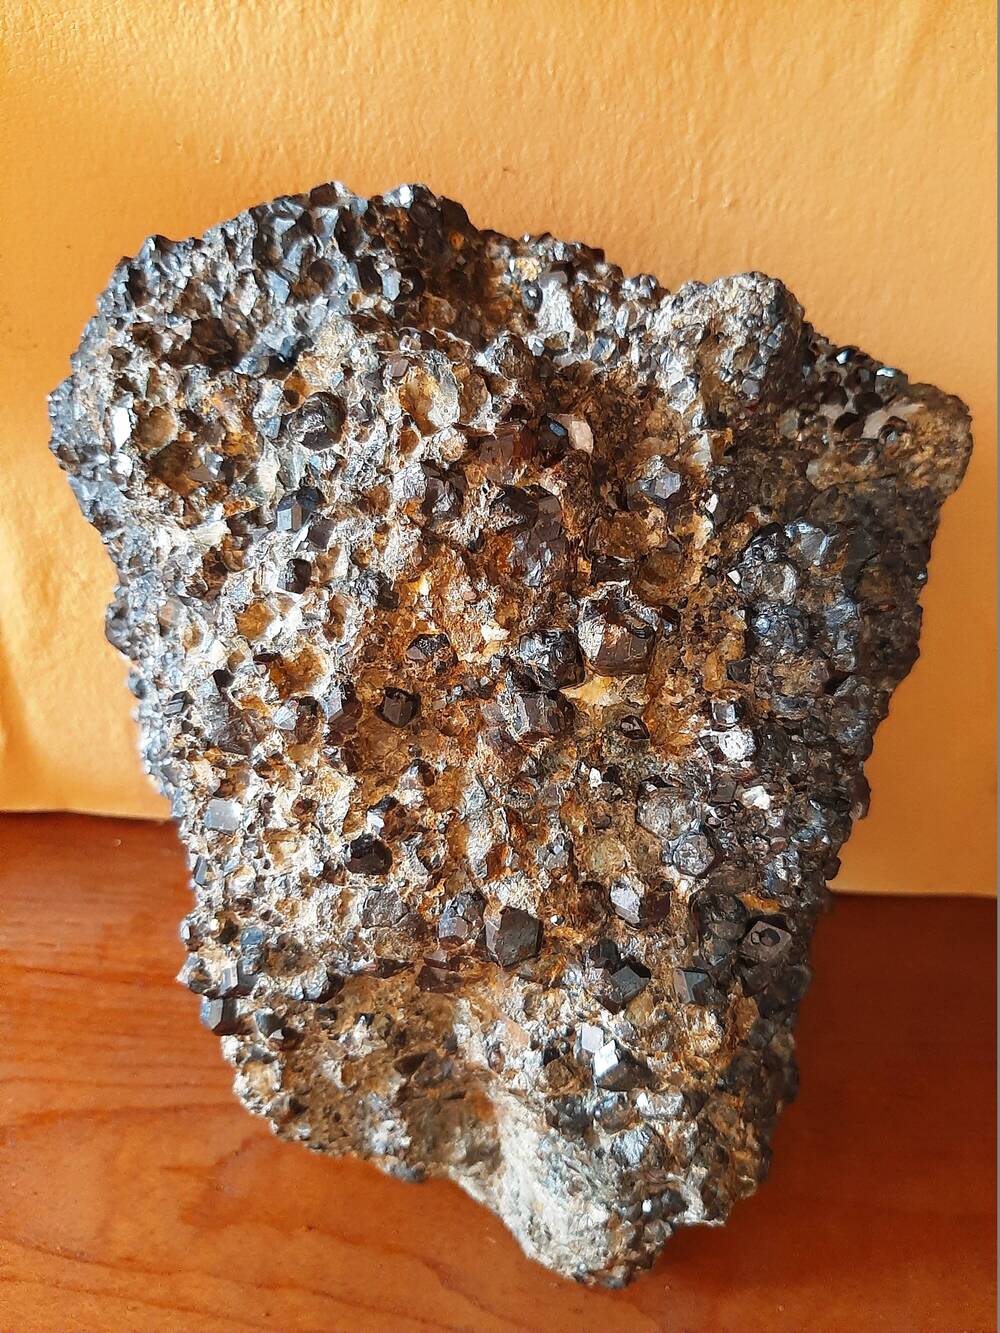 Образец железной руды